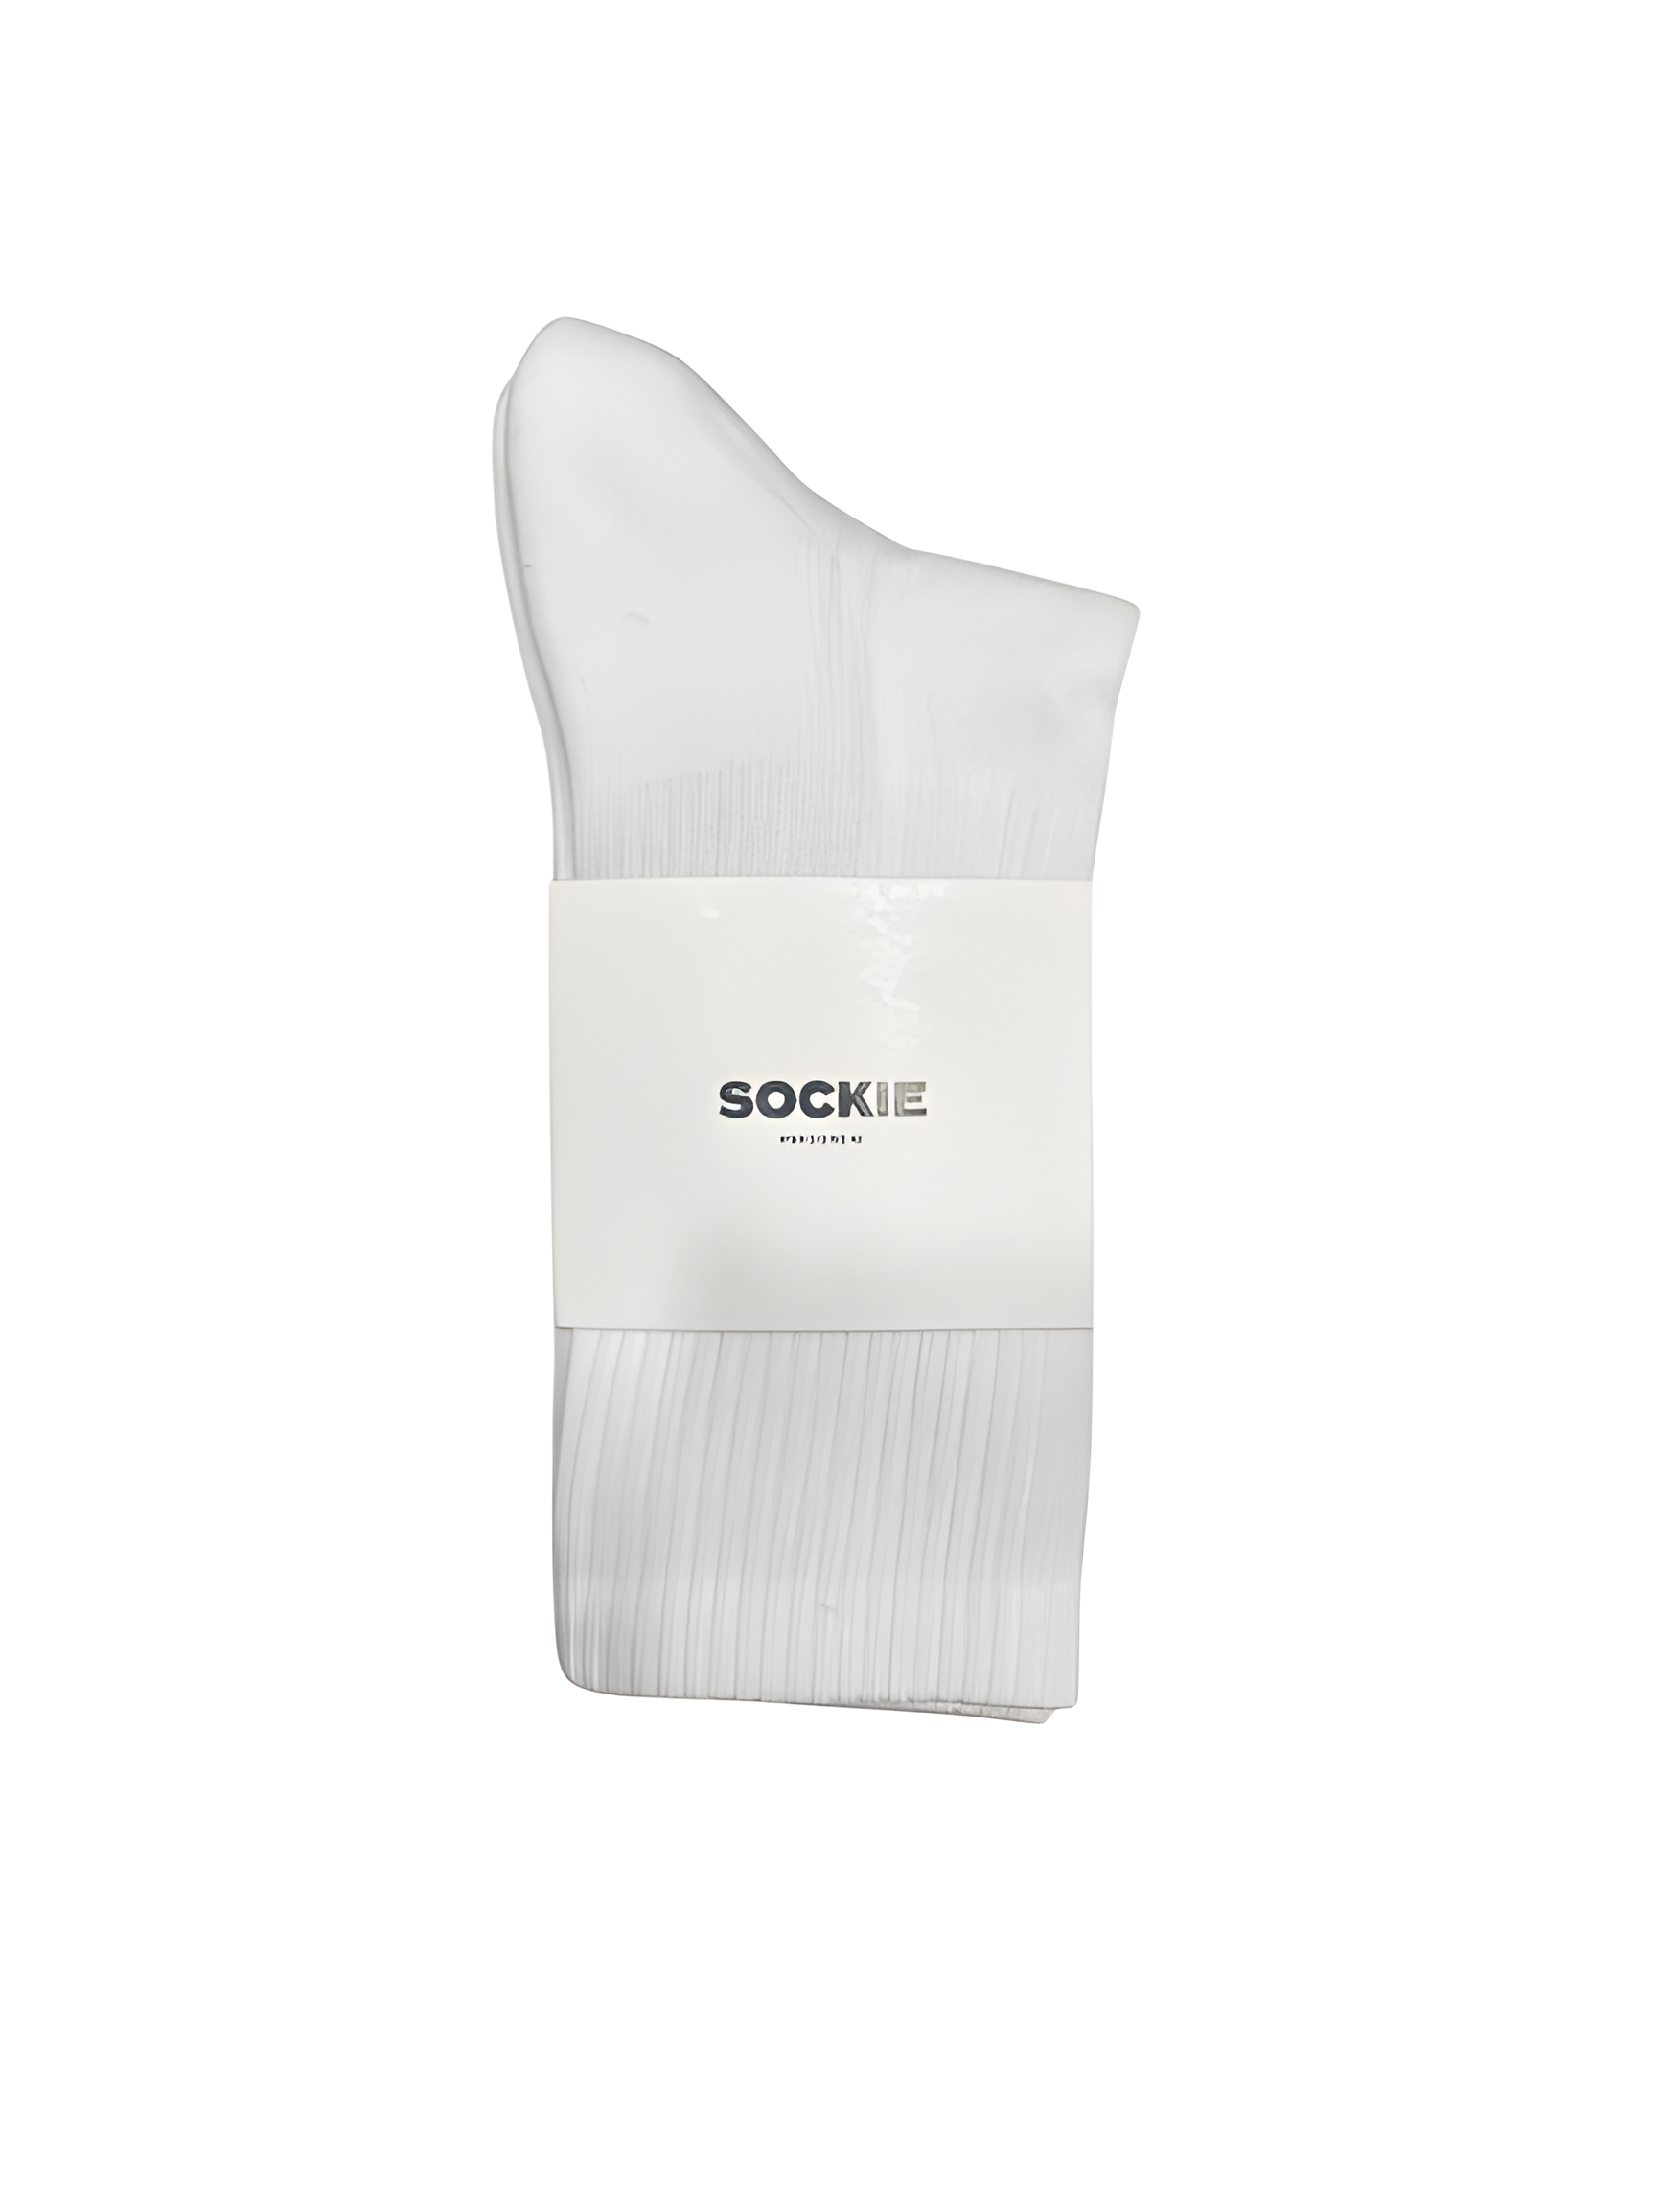 Wearsockie White Socks